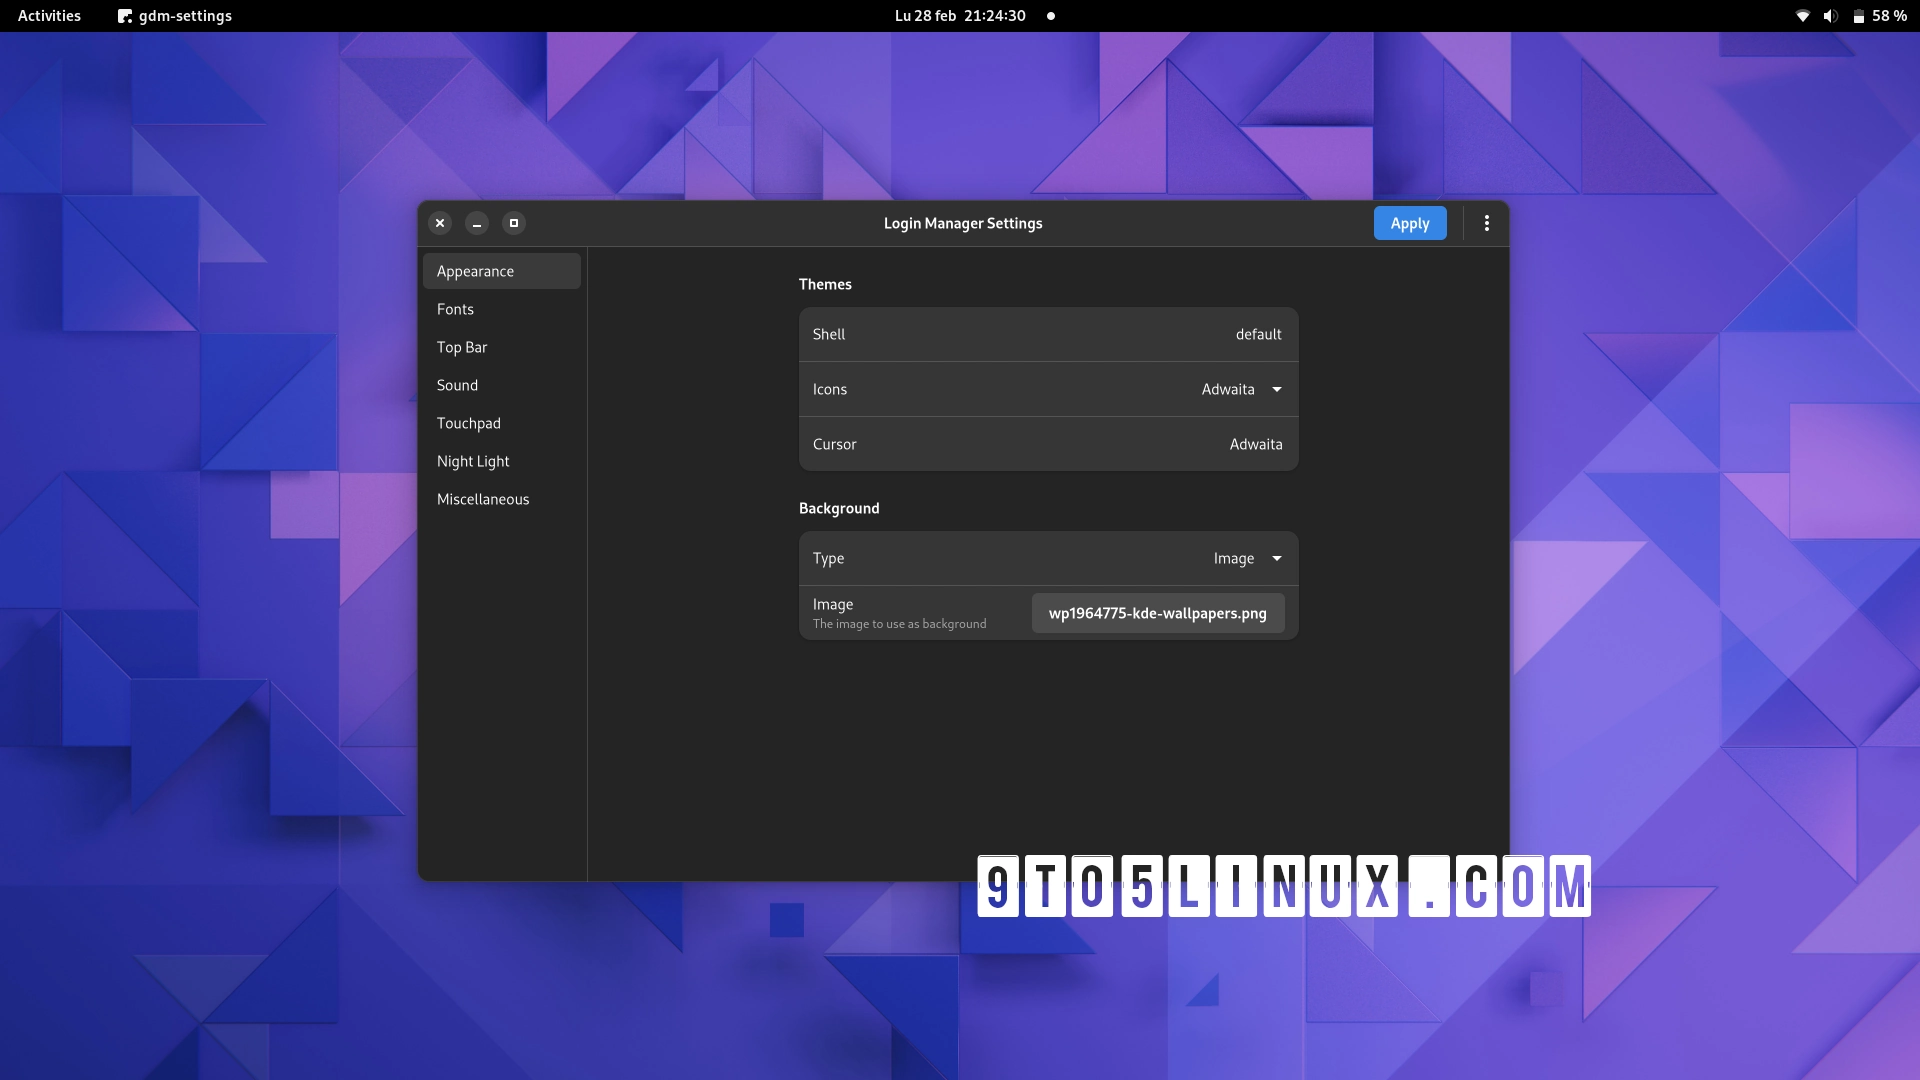 Meet Login Manager Settings, a New App to Customize Your GNOME Desktop’s Login Screen